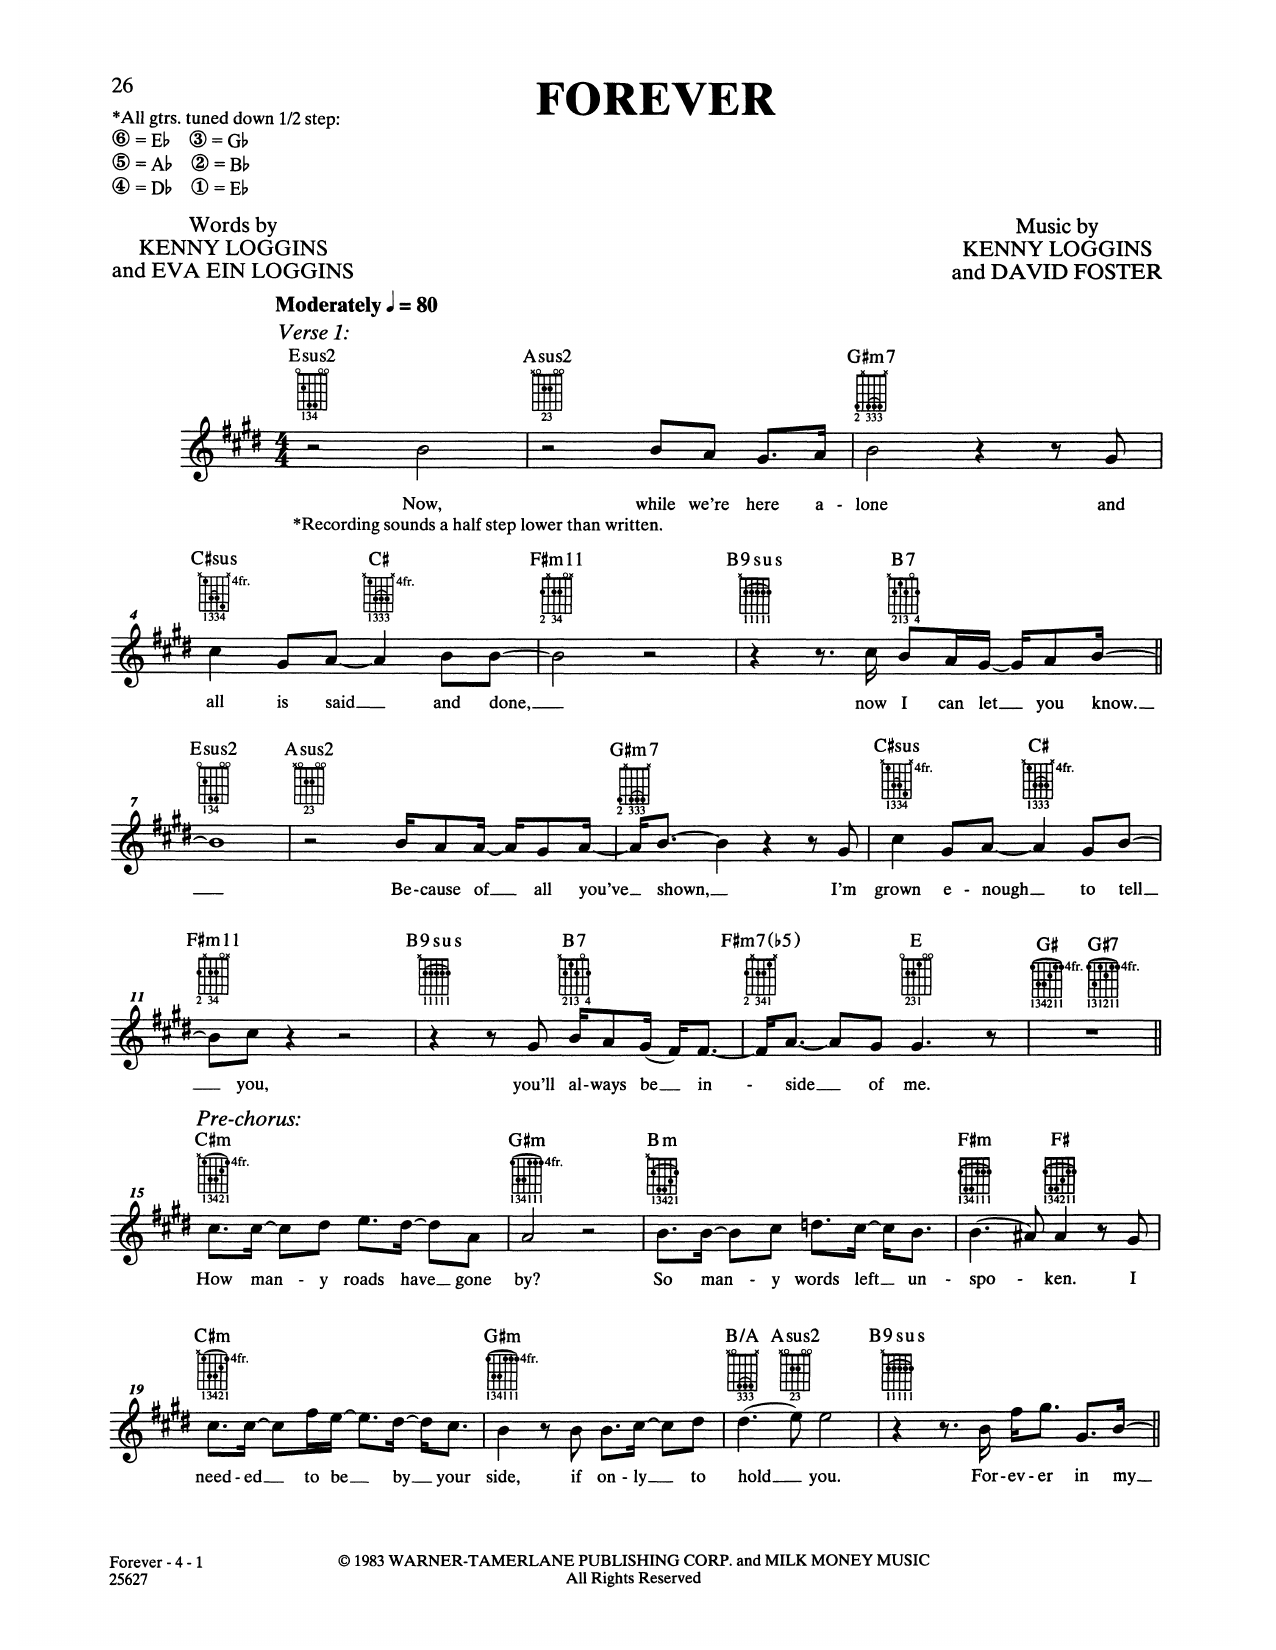 Kenny Loggins Forever Sheet Music Notes & Chords for Easy Guitar - Download or Print PDF